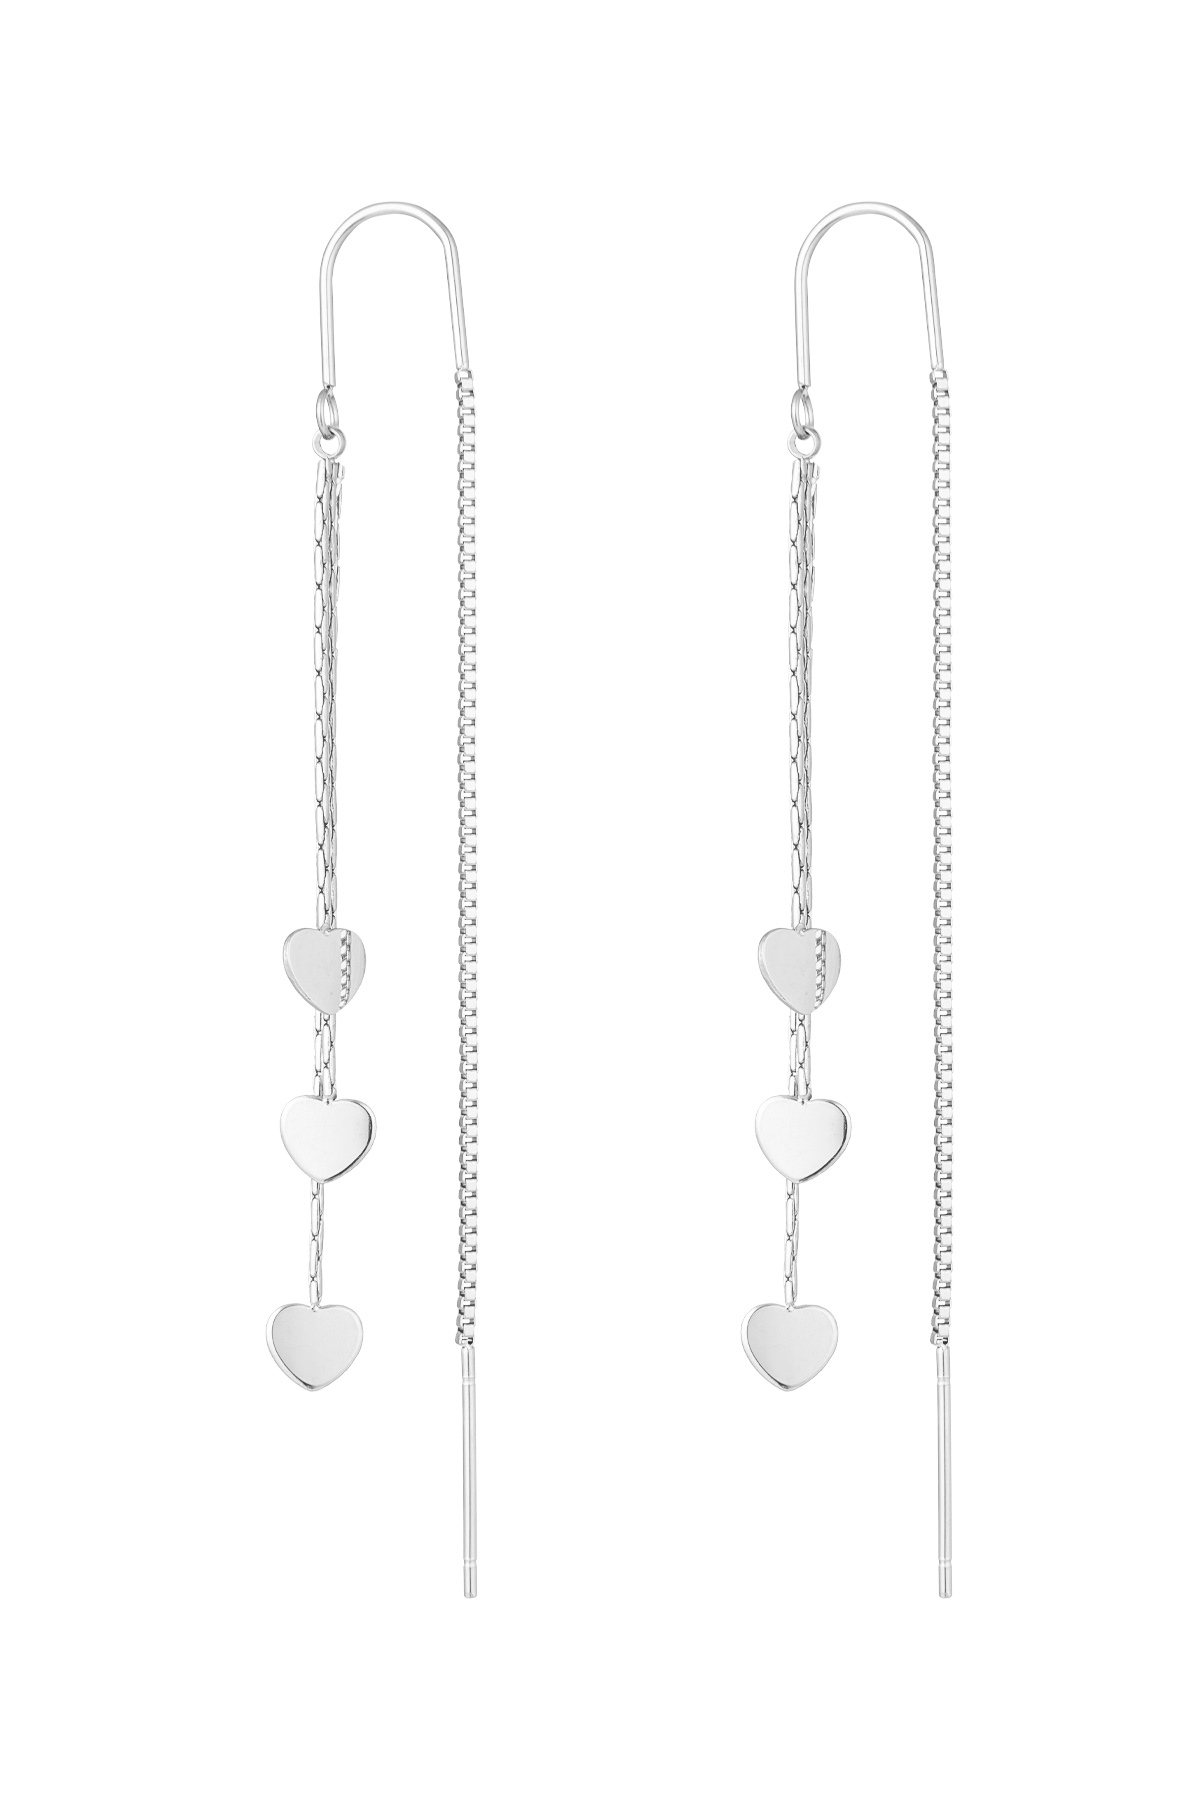 Hanging earrings 3 x hearts - silver